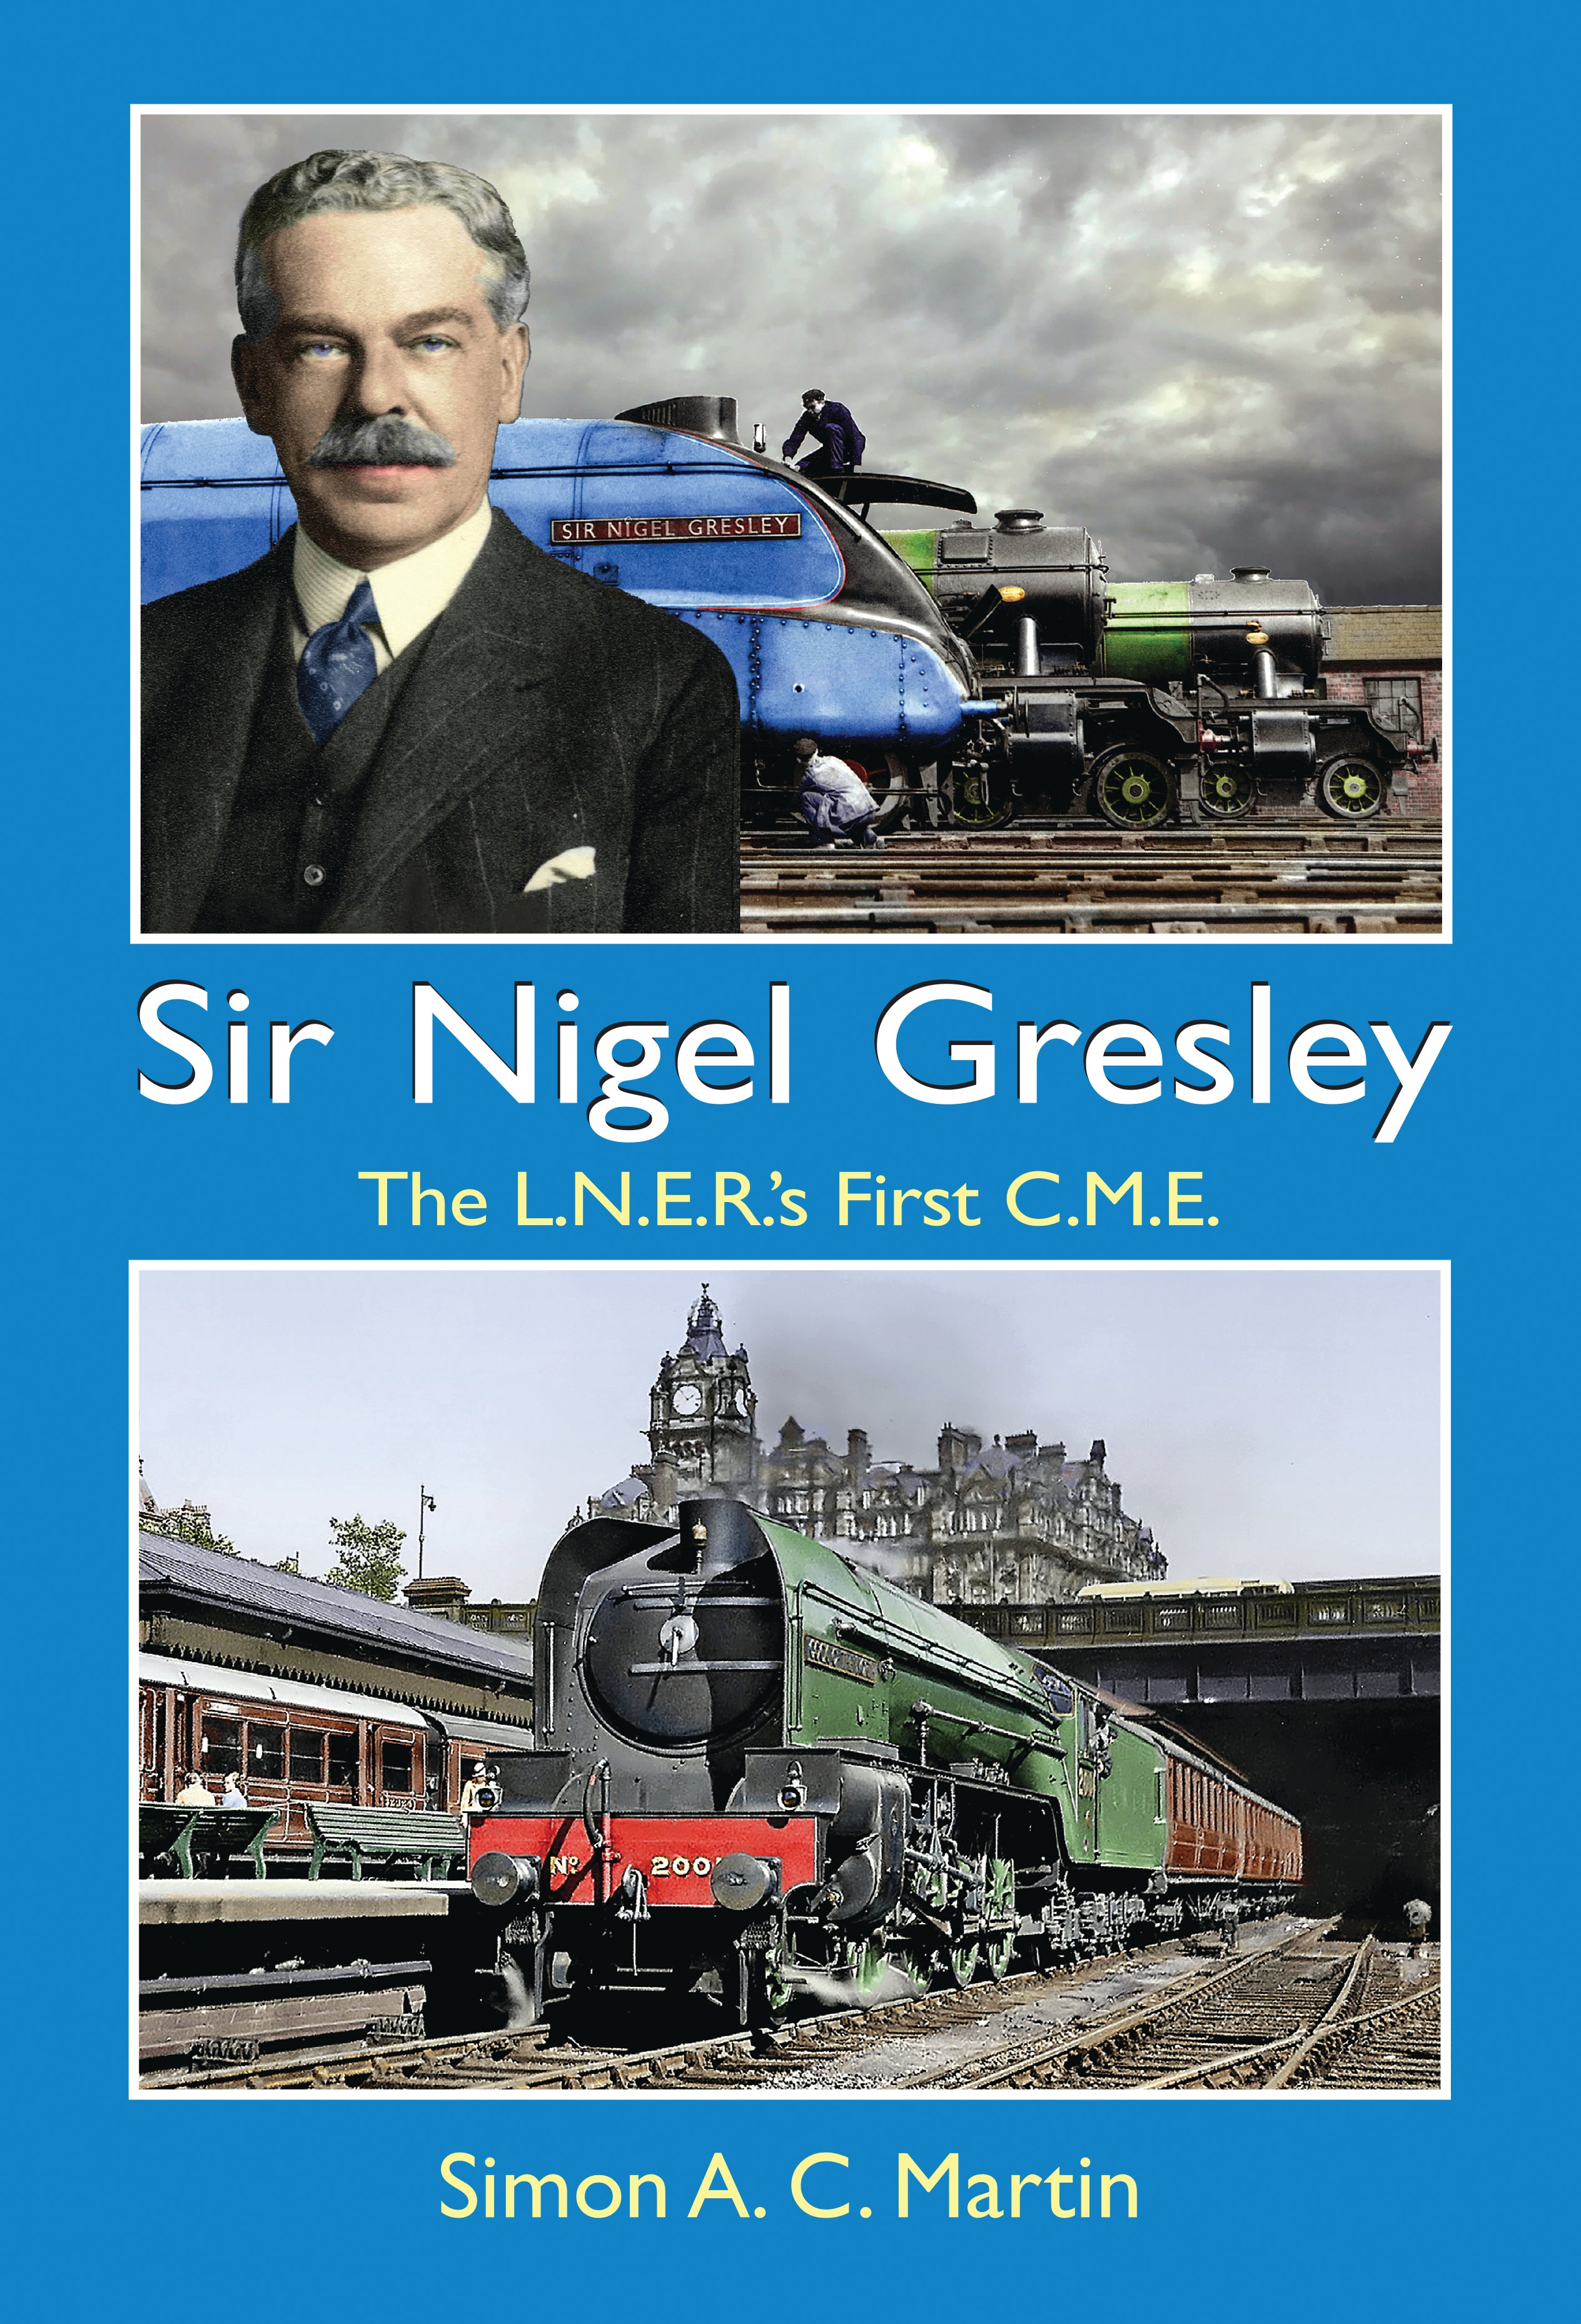 Sir Nigel Gresley The L.N.E.R.'s First C.M.E.